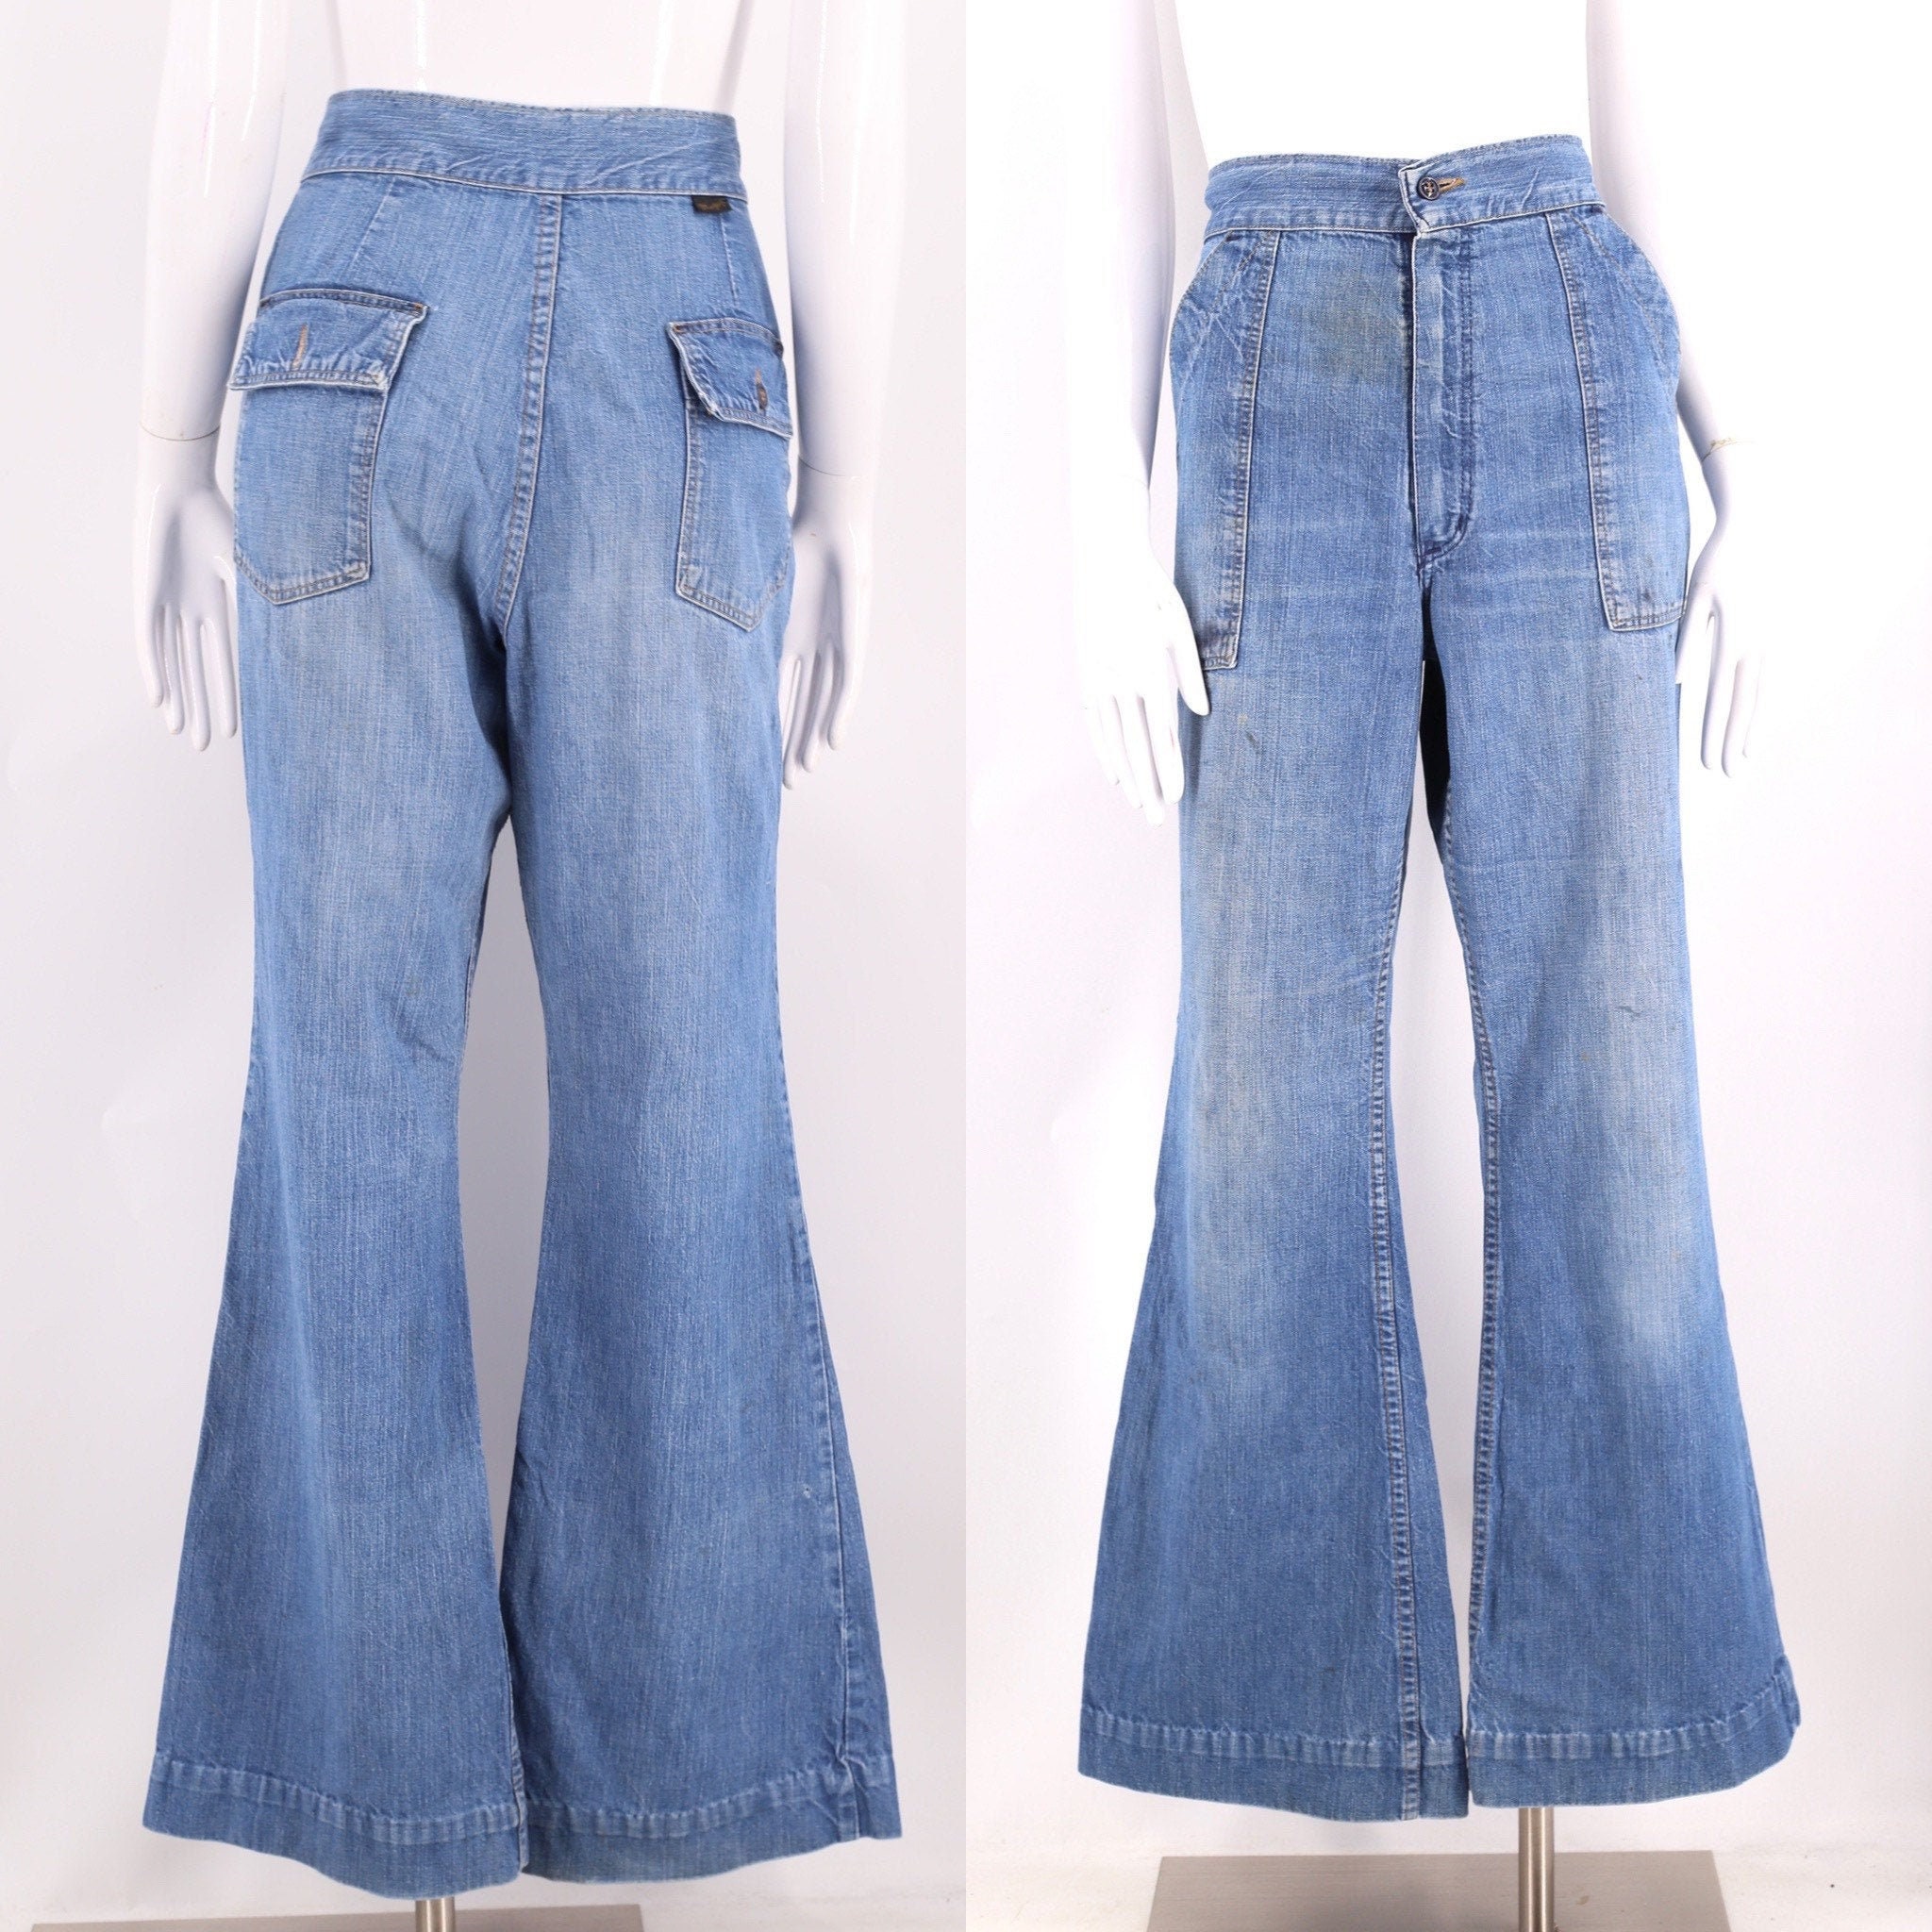 70s Wrangler denim bell bottoms jeans 29 / vintage 1970s worn in 